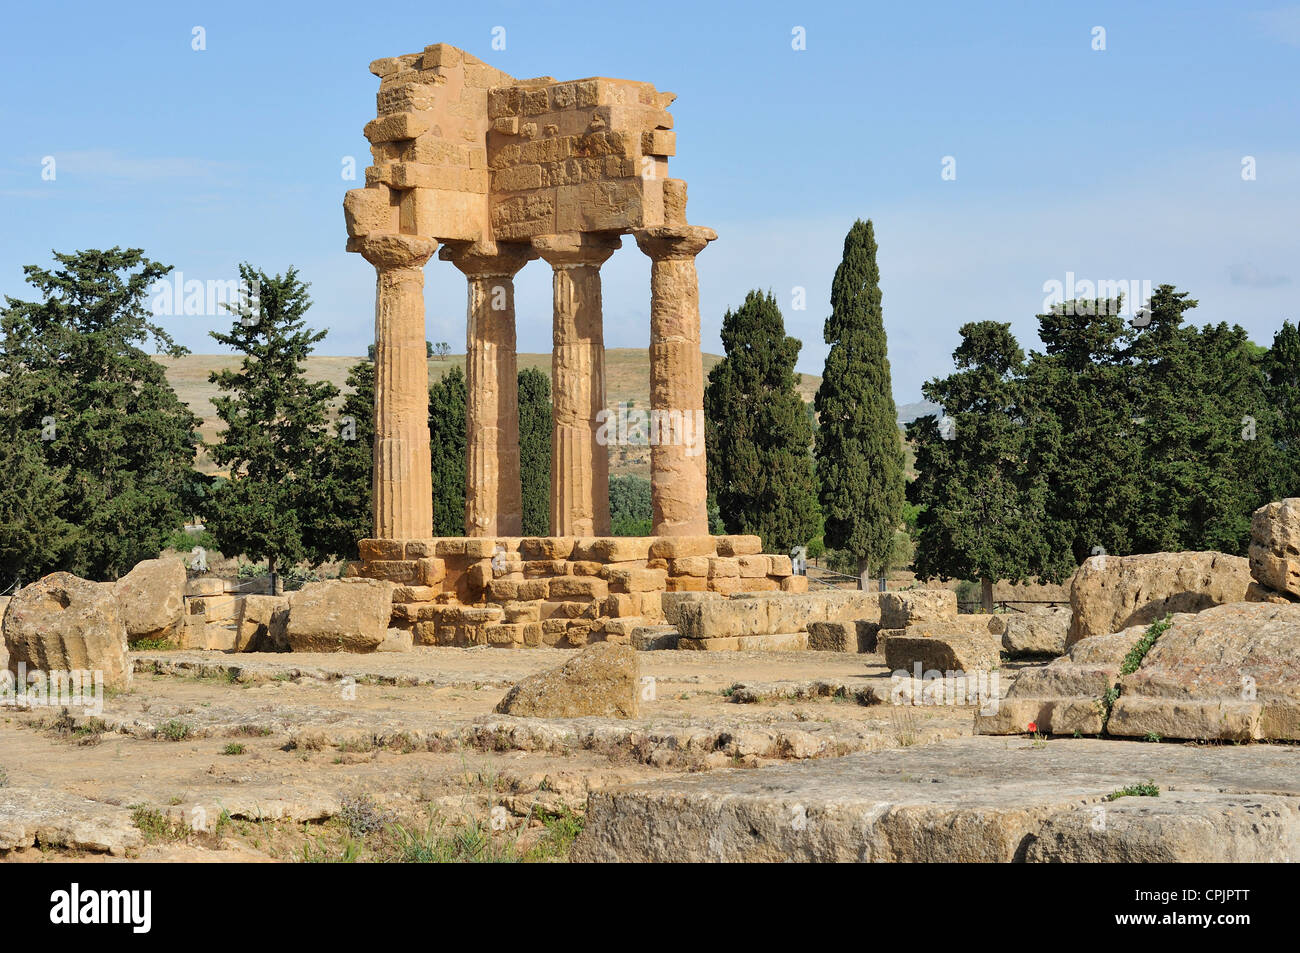 Agrigento. Sizilien. Italien. Tempel der Dioskuren (aka Tempel von Castor & Pollux), Tal der Tempel archäologischen Stätte. Stockfoto